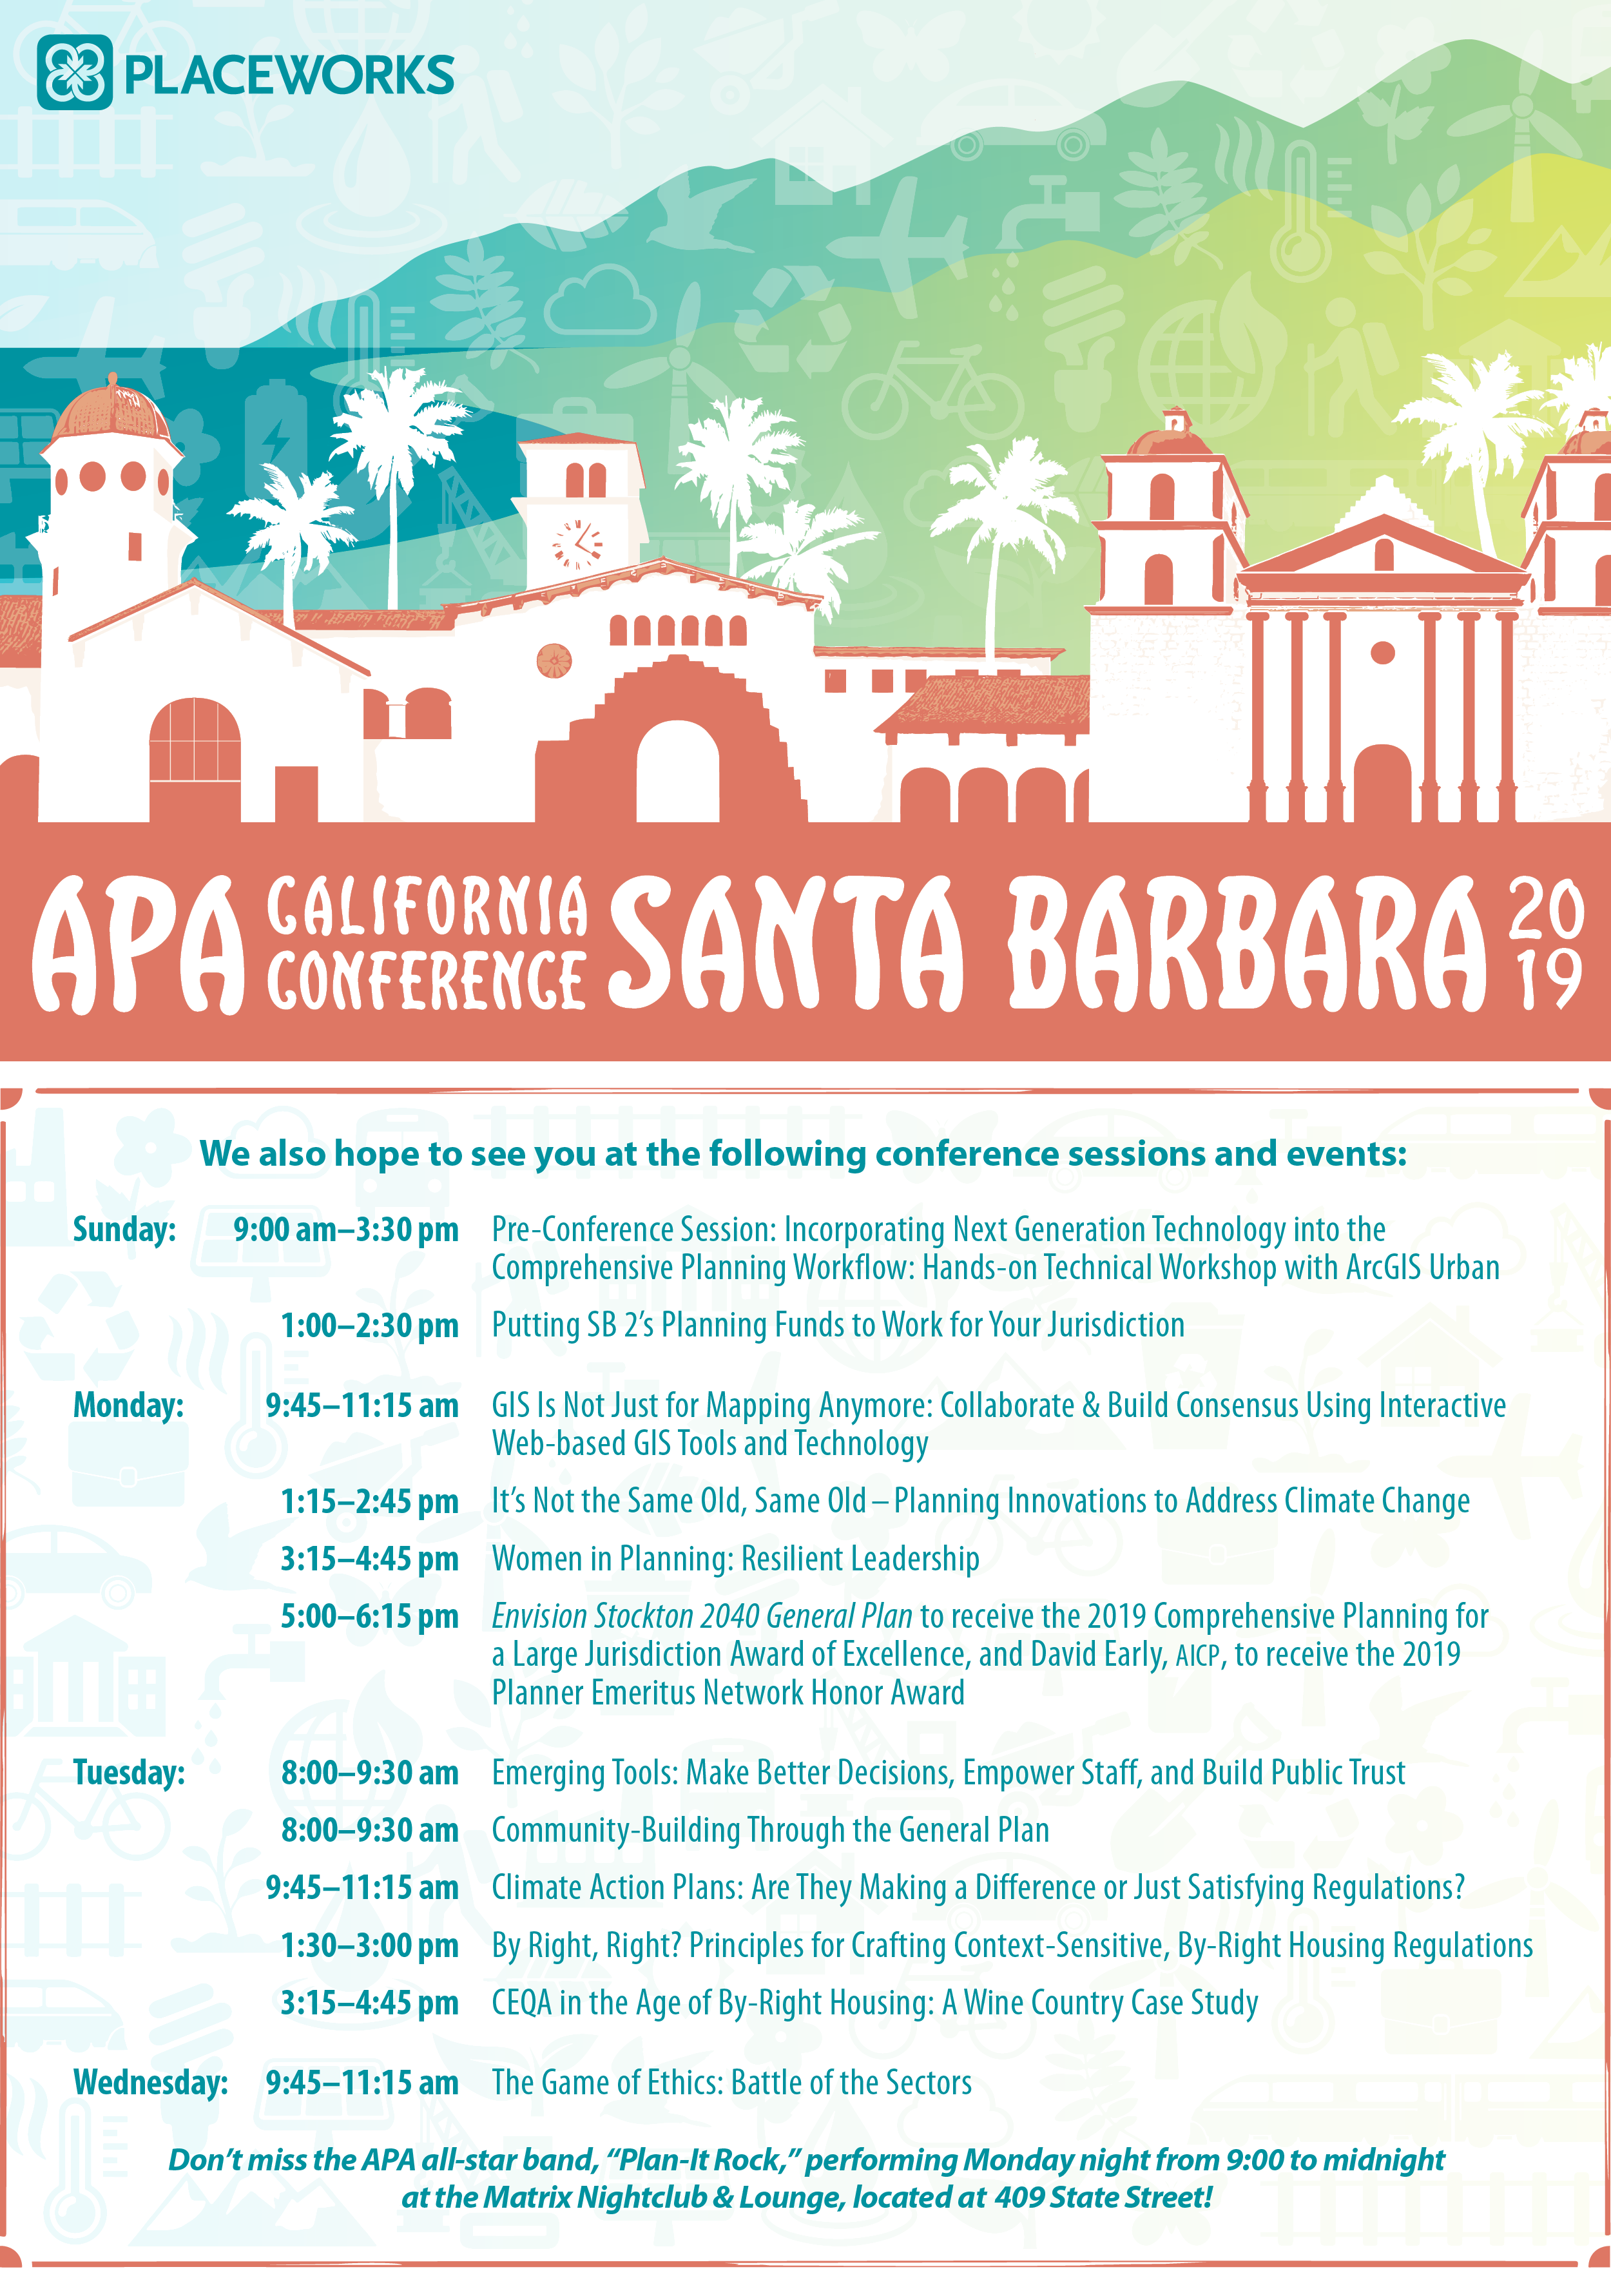 2019 APA California Conference in Santa Barbara Placeworks, Inc.